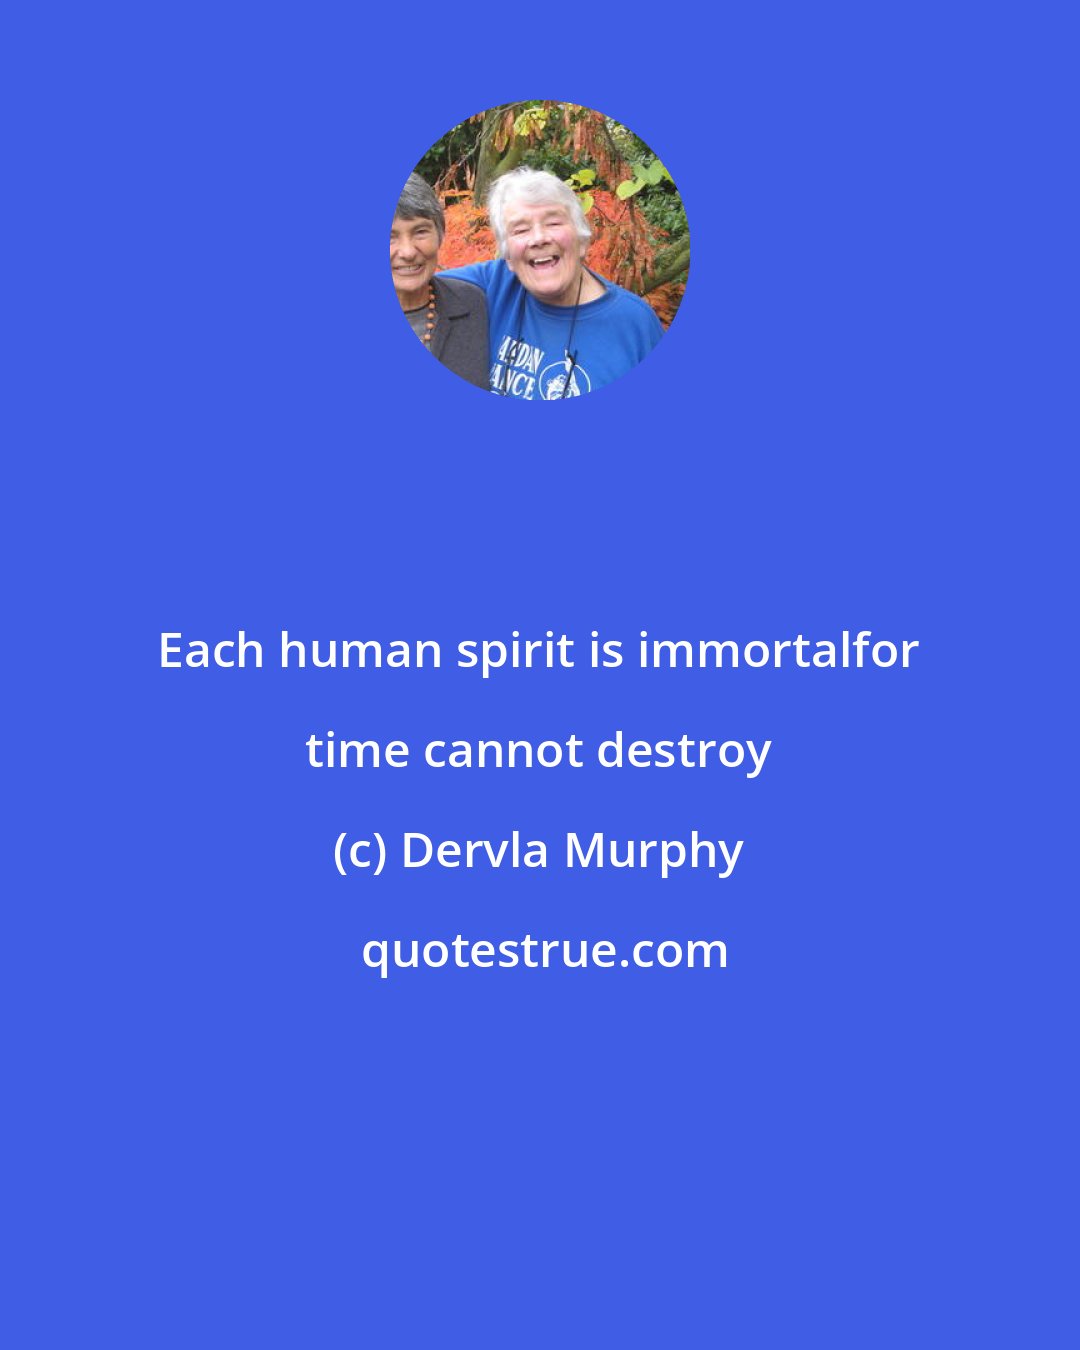 Dervla Murphy: Each human spirit is immortalfor time cannot destroy